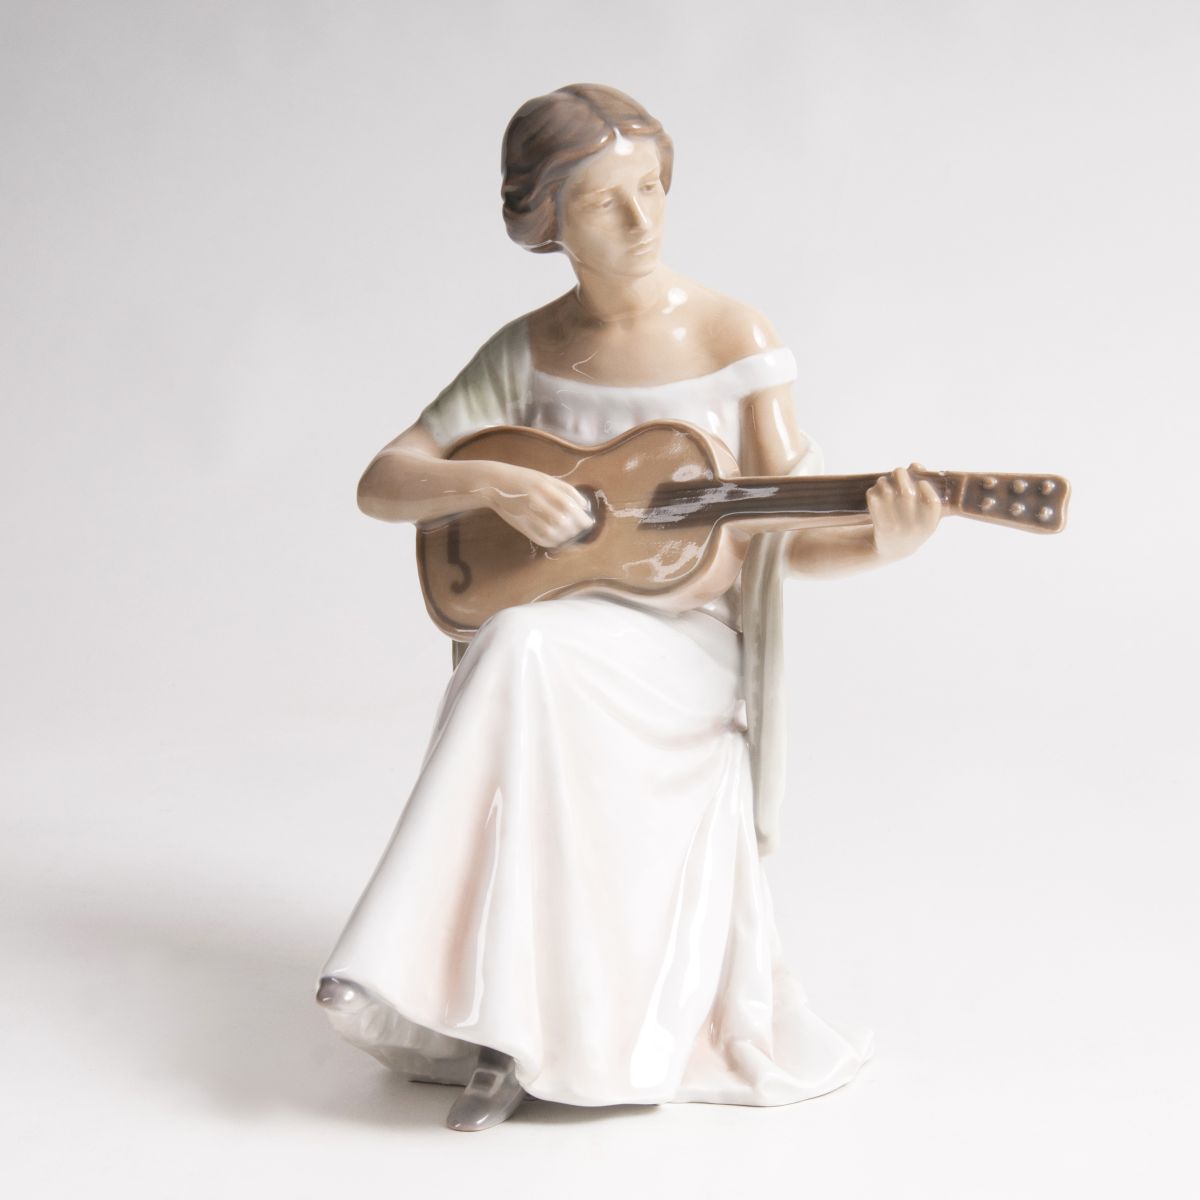 A Porcelain Figure 'Guitar Player'